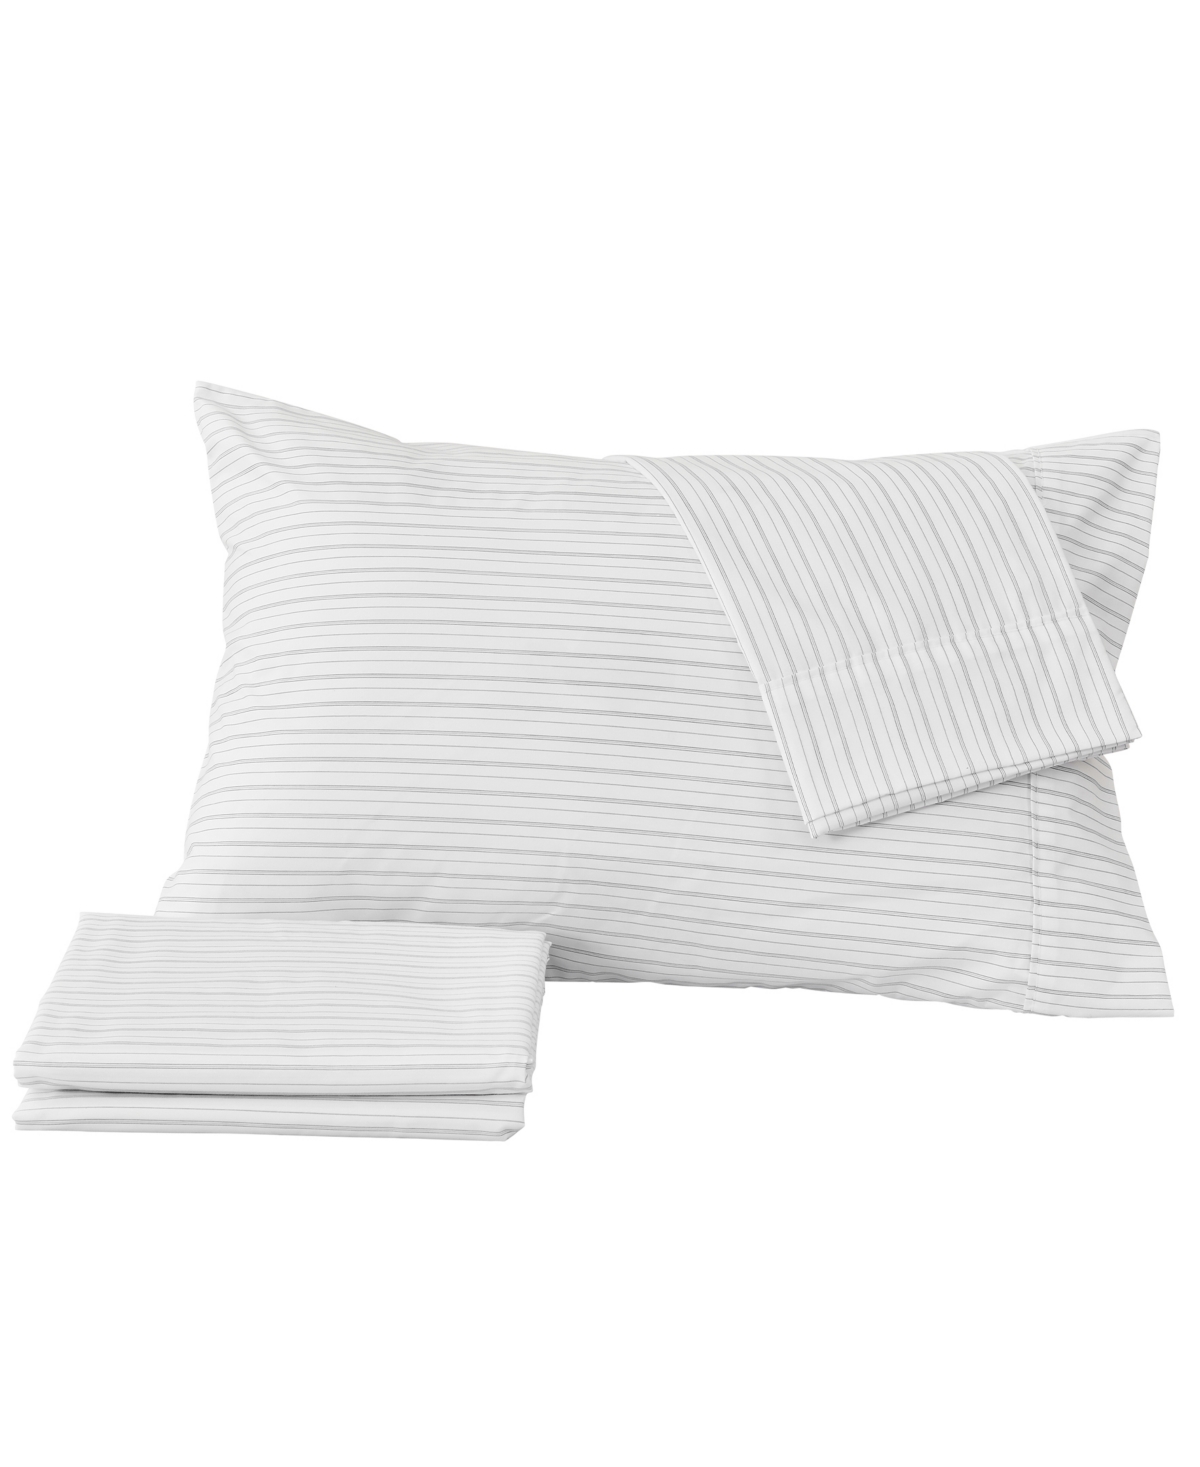 Premium Comforts Striped Microfiber Crease Resistant 4 Piece Sheet Set, Queen In Multi Stripe - Dark Gray